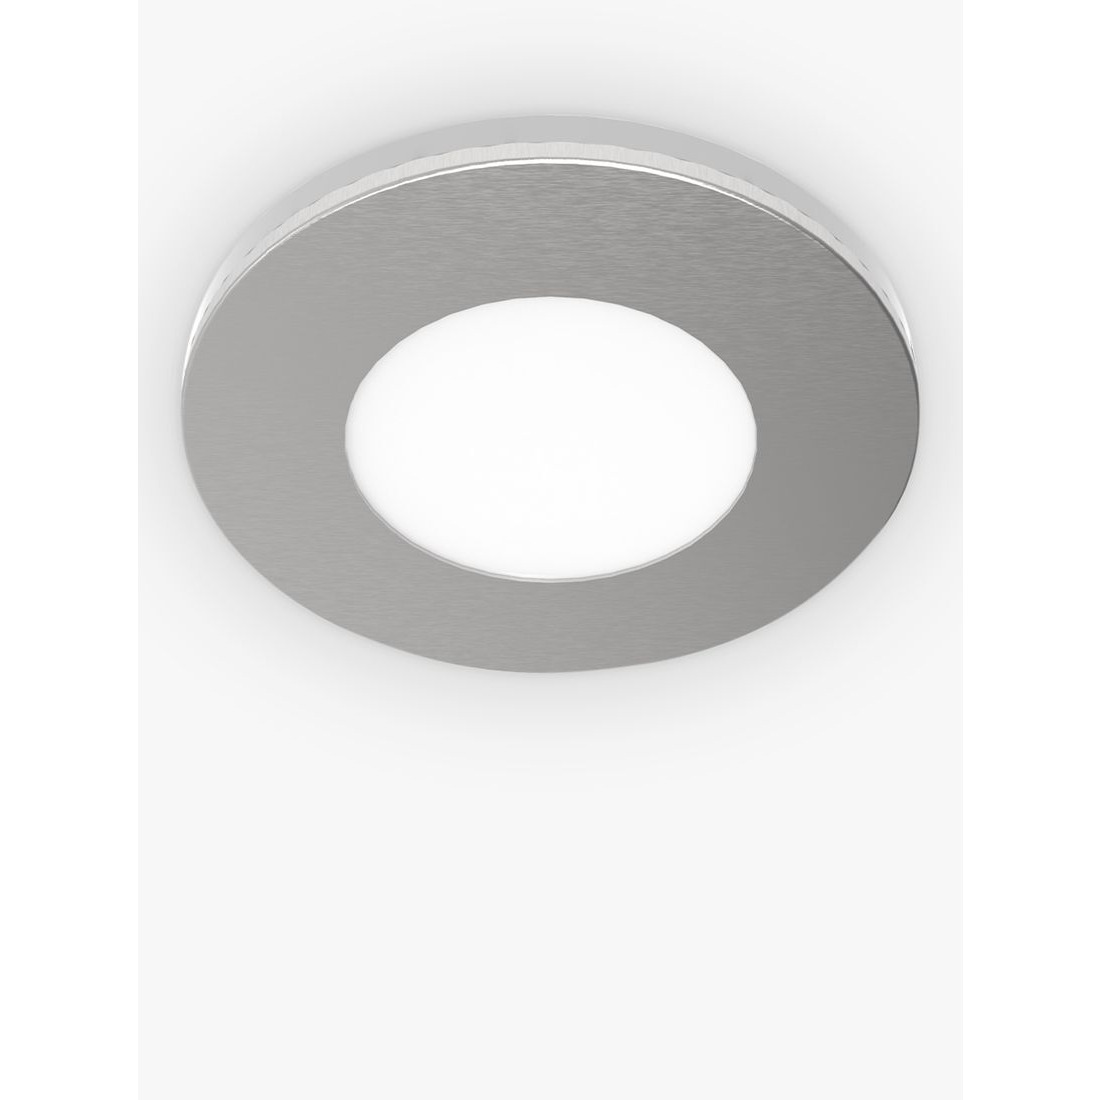 Sensio Apex TrioTone LED Under Kitchen Cabinet Light, Stainless Steel - image 1